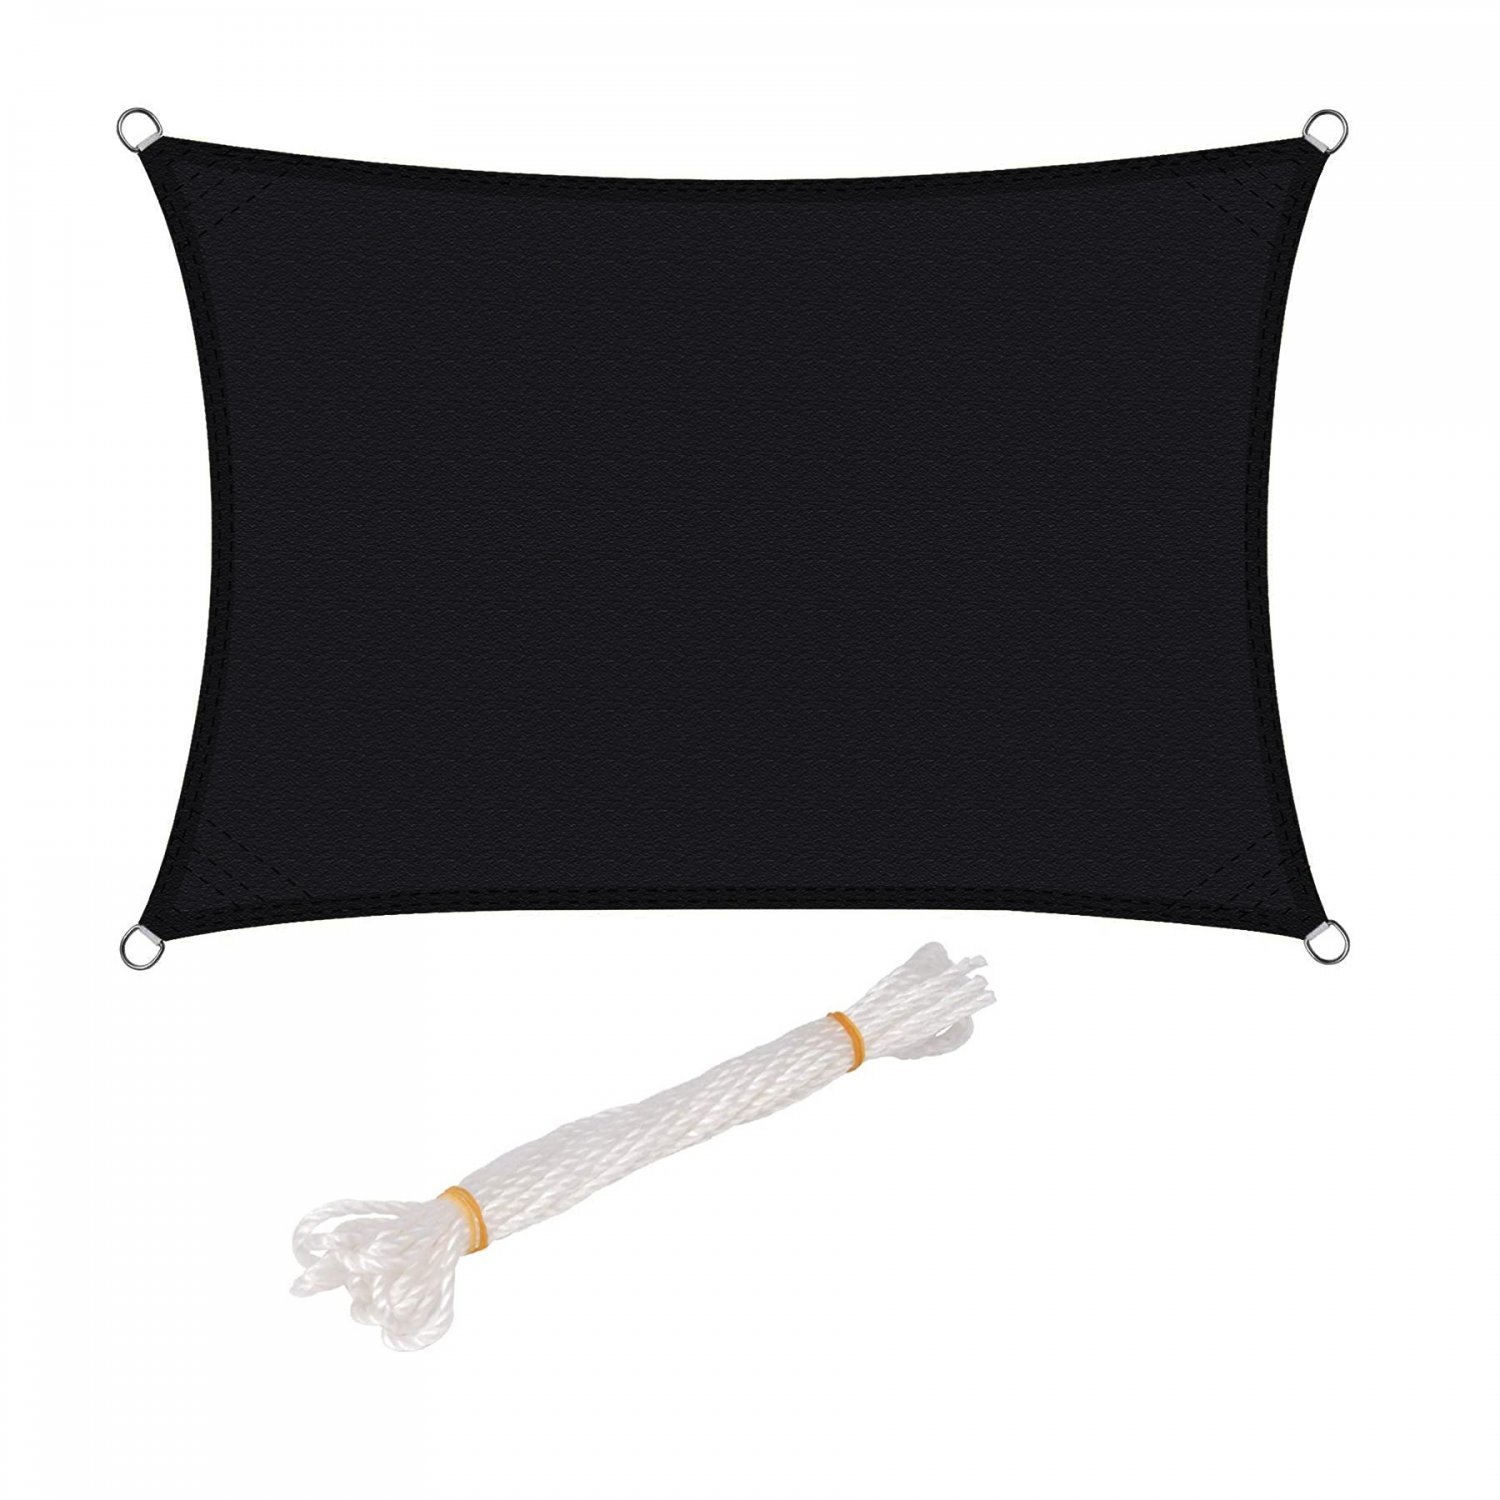 3m x 4m Black Rectangular Outdoor Patio Sun Shade Sail Canopy UV Protection - Click Image to Close